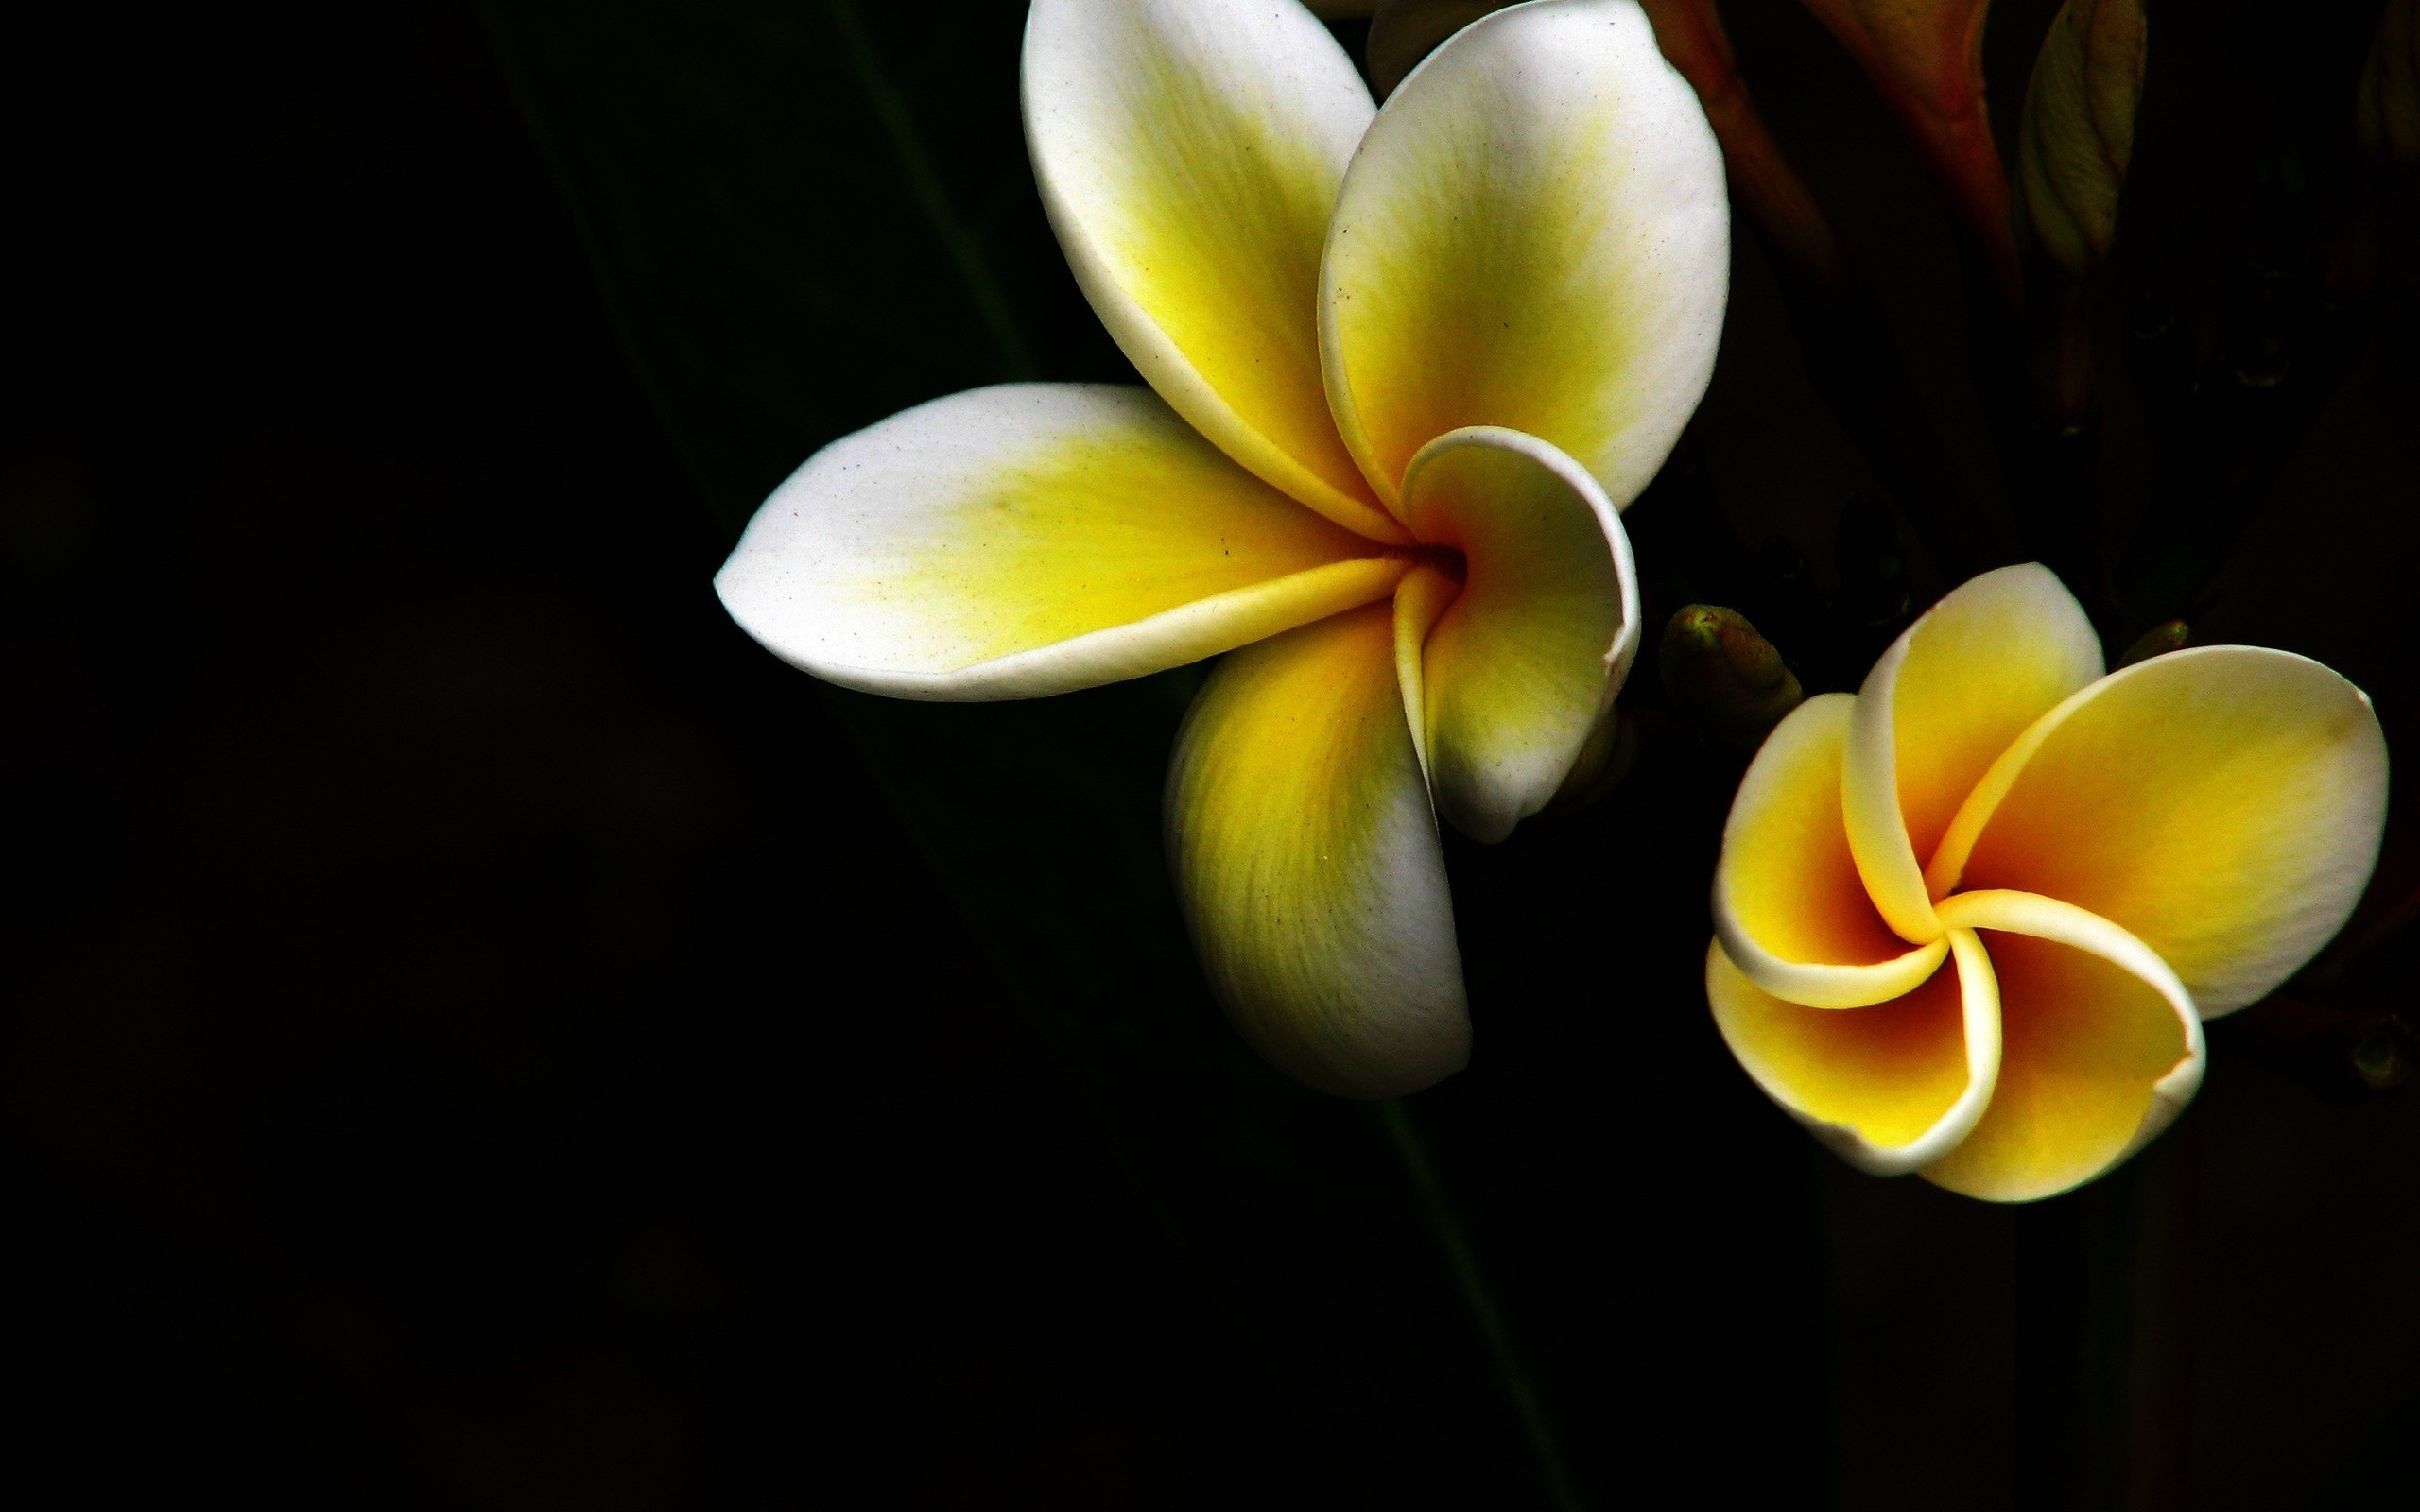 229044 descargar imagen tierra/naturaleza, frangipani, flor, flores: fondos de pantalla y protectores de pantalla gratis